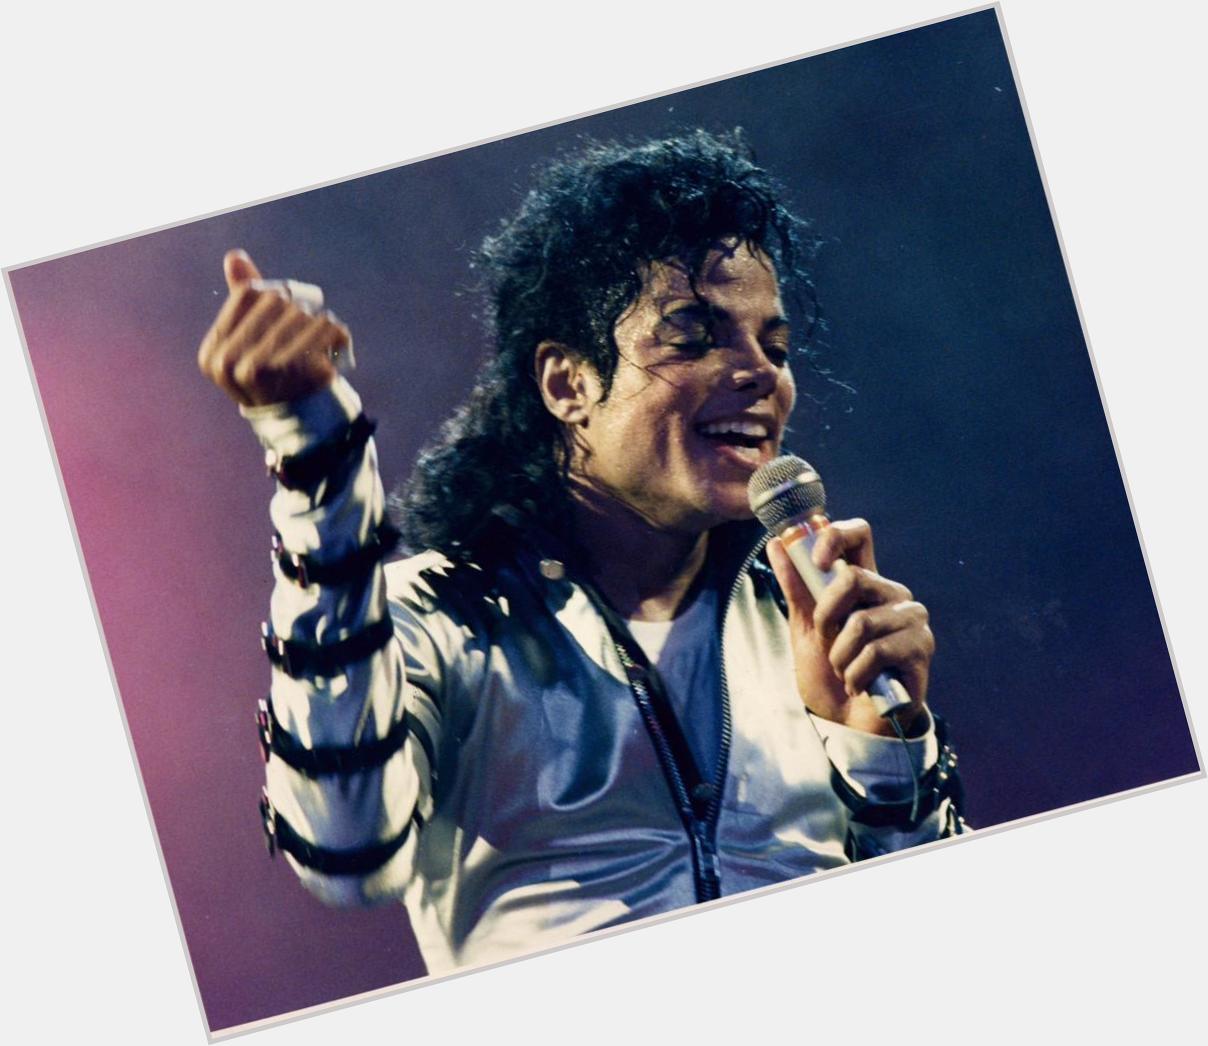 Happy Birthday to The King of Pop, Michael Jackson. 